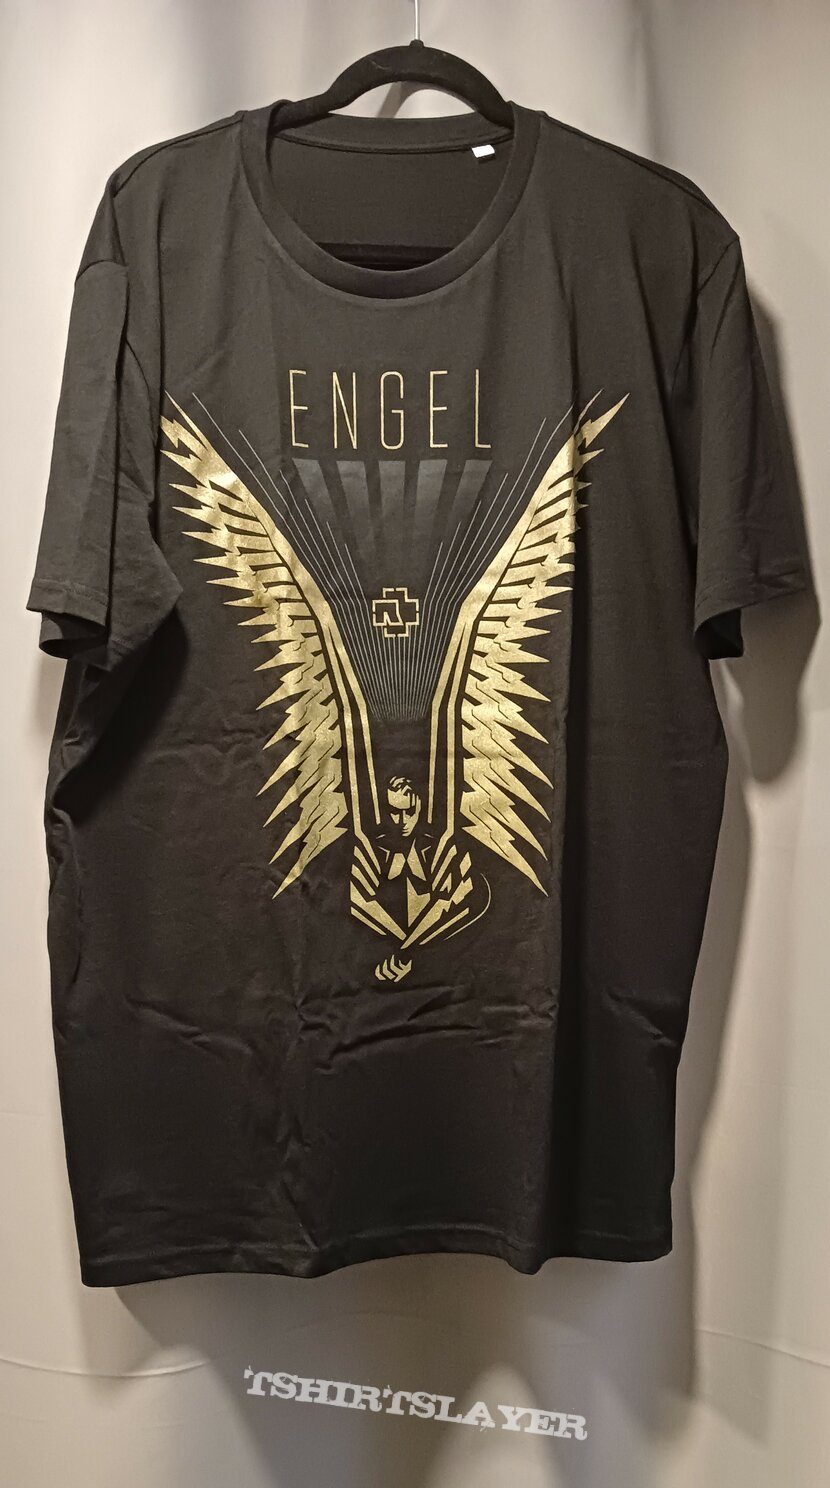 Rammstein - Engel ”Flügel” shirt | TShirtSlayer TShirt and BattleJacket  Gallery